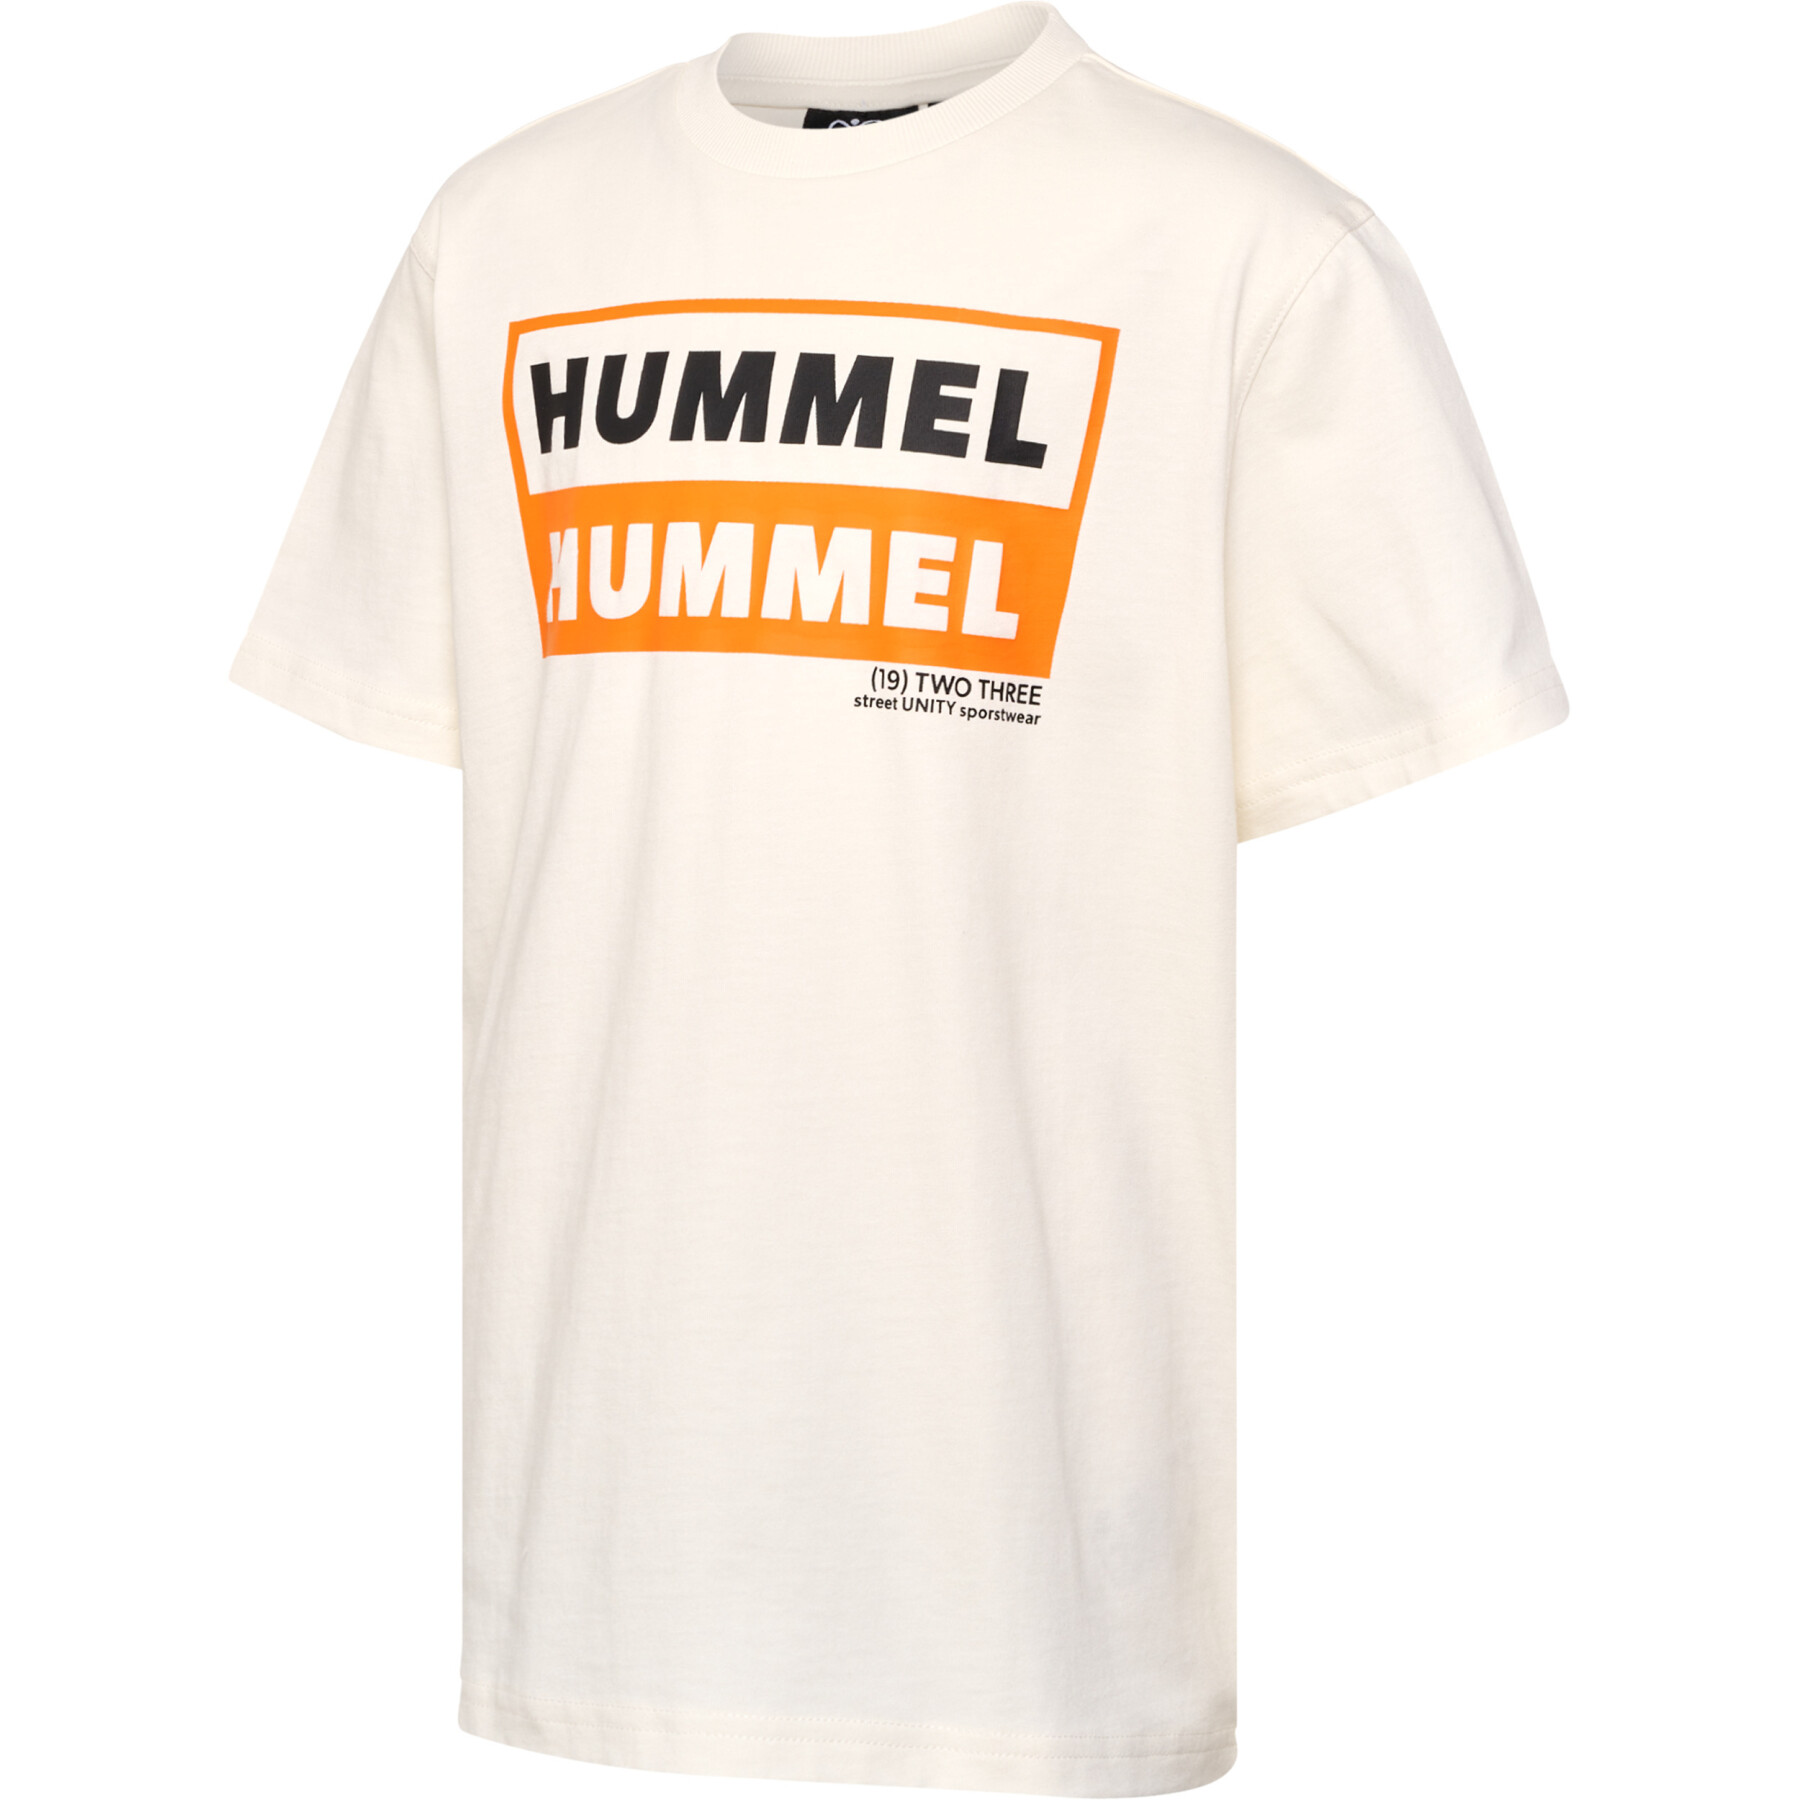 Maglietta per bambini Hummel Two